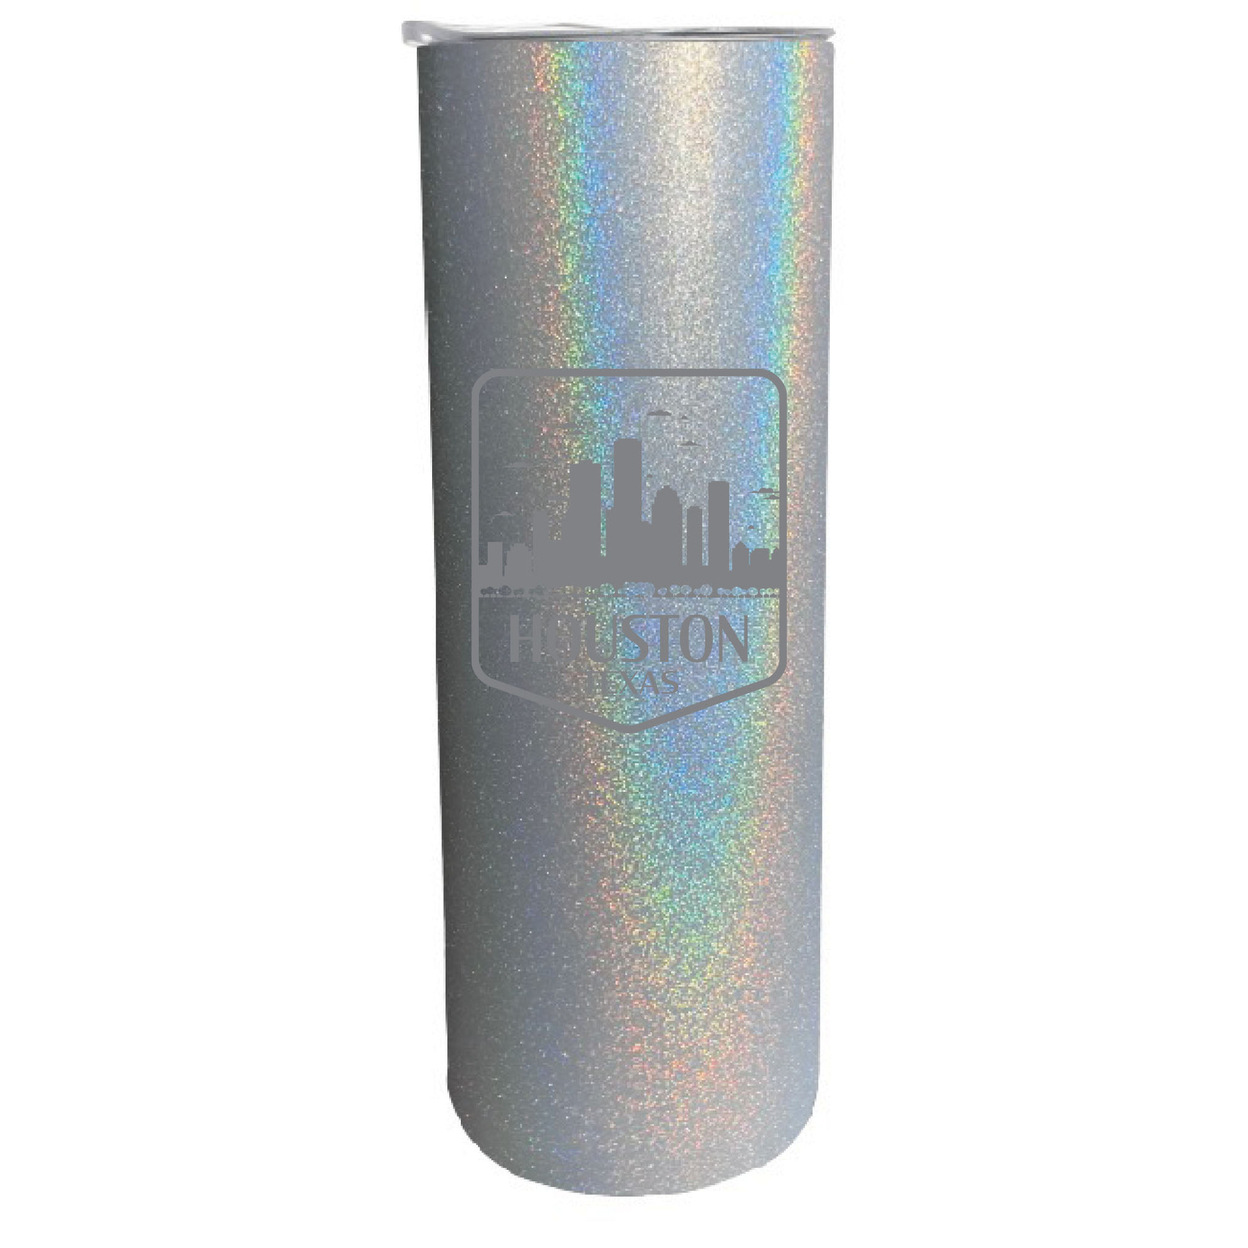 Houston Texas Souvenir 20 Oz Engraved Insulated Stainless Steel Skinny Tumbler - Gray Glitter,,2-Pack